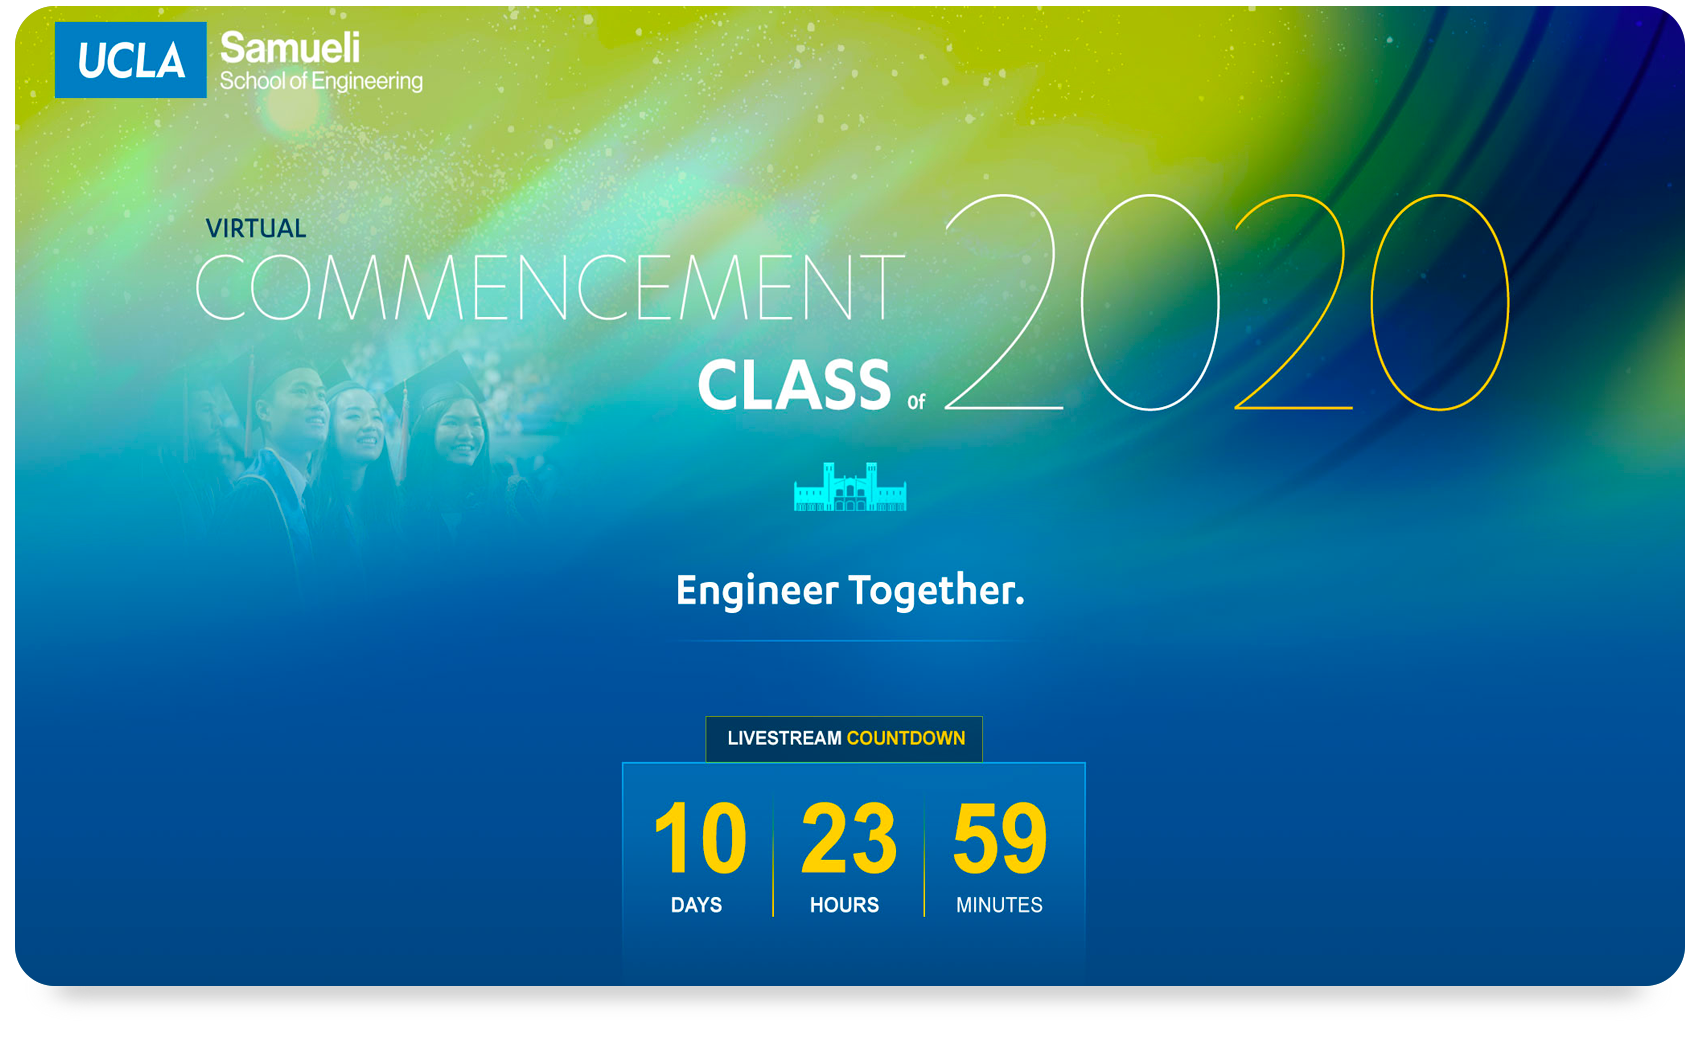 UCLA Samueli Commencement Website